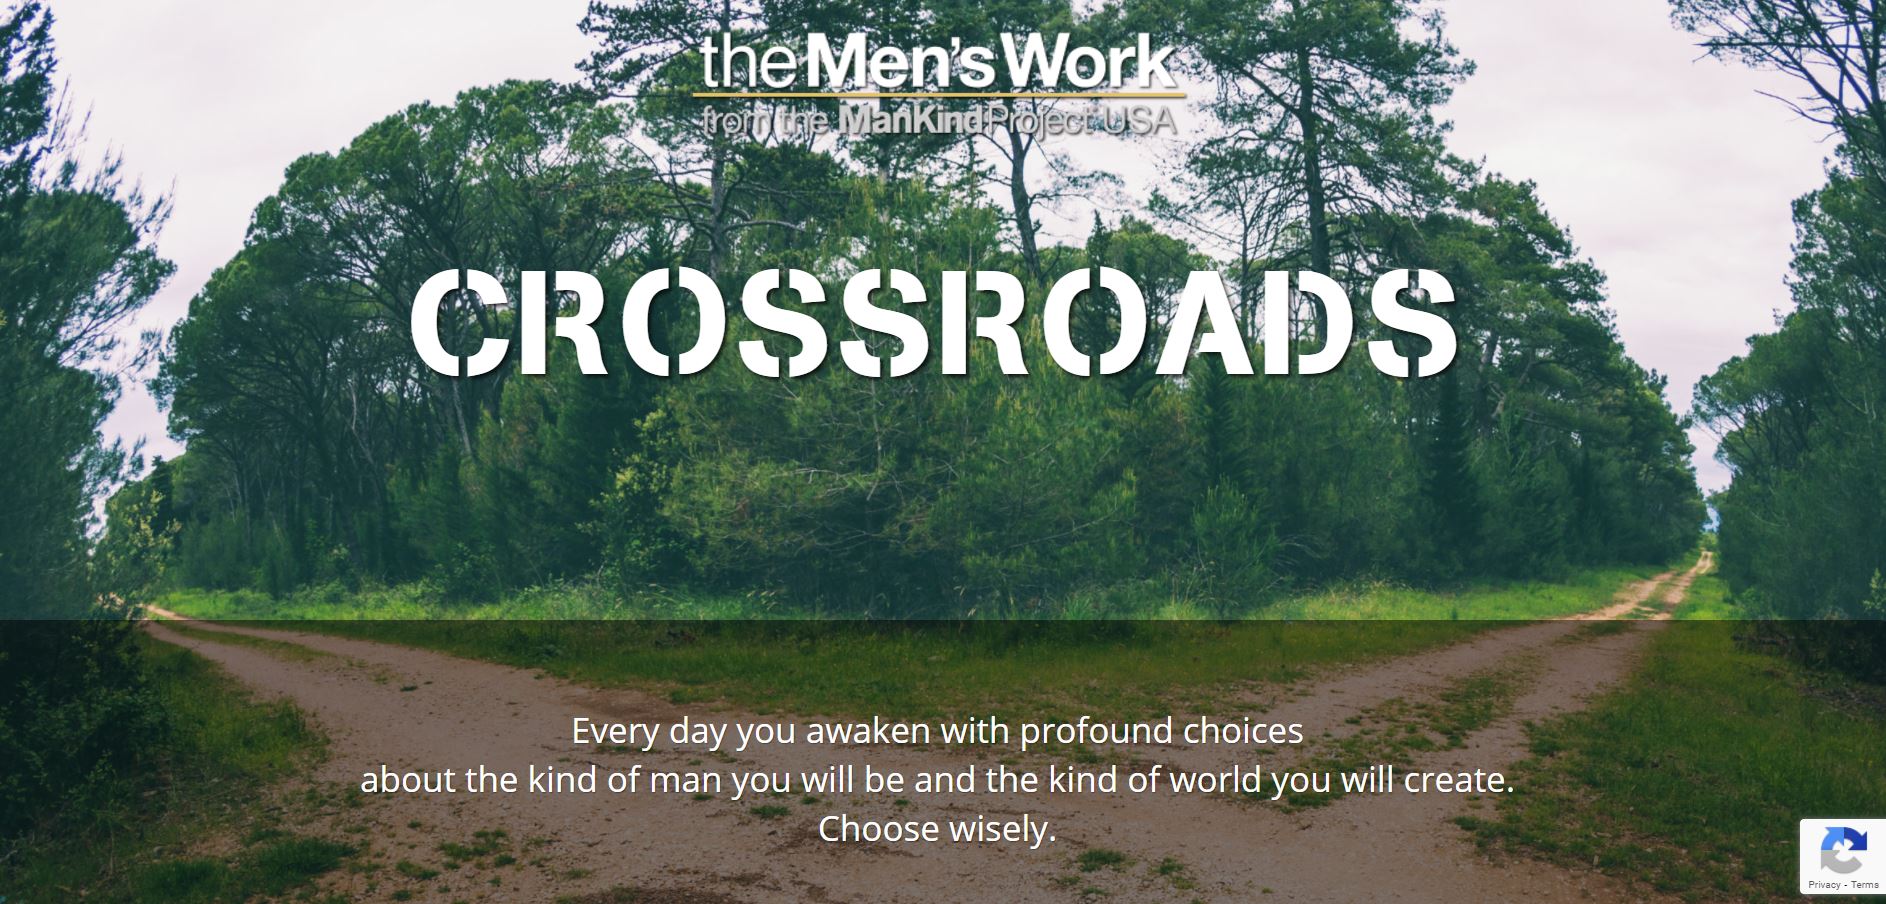 Crossroads promotional image